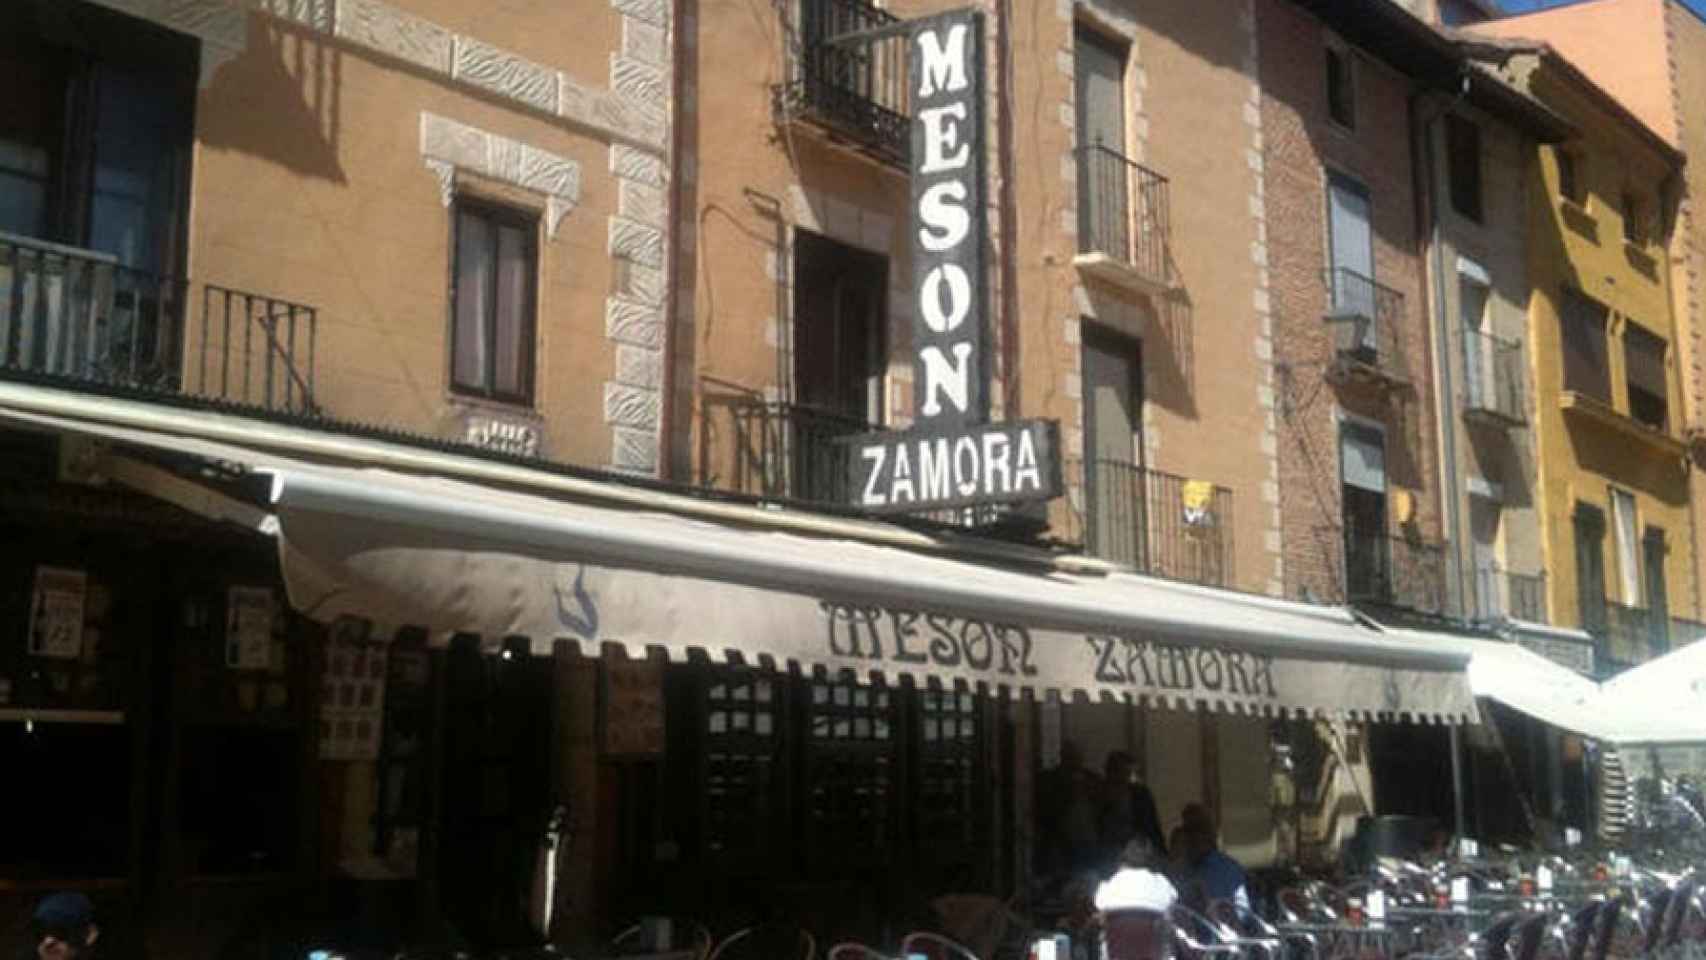 Mesón Zamora